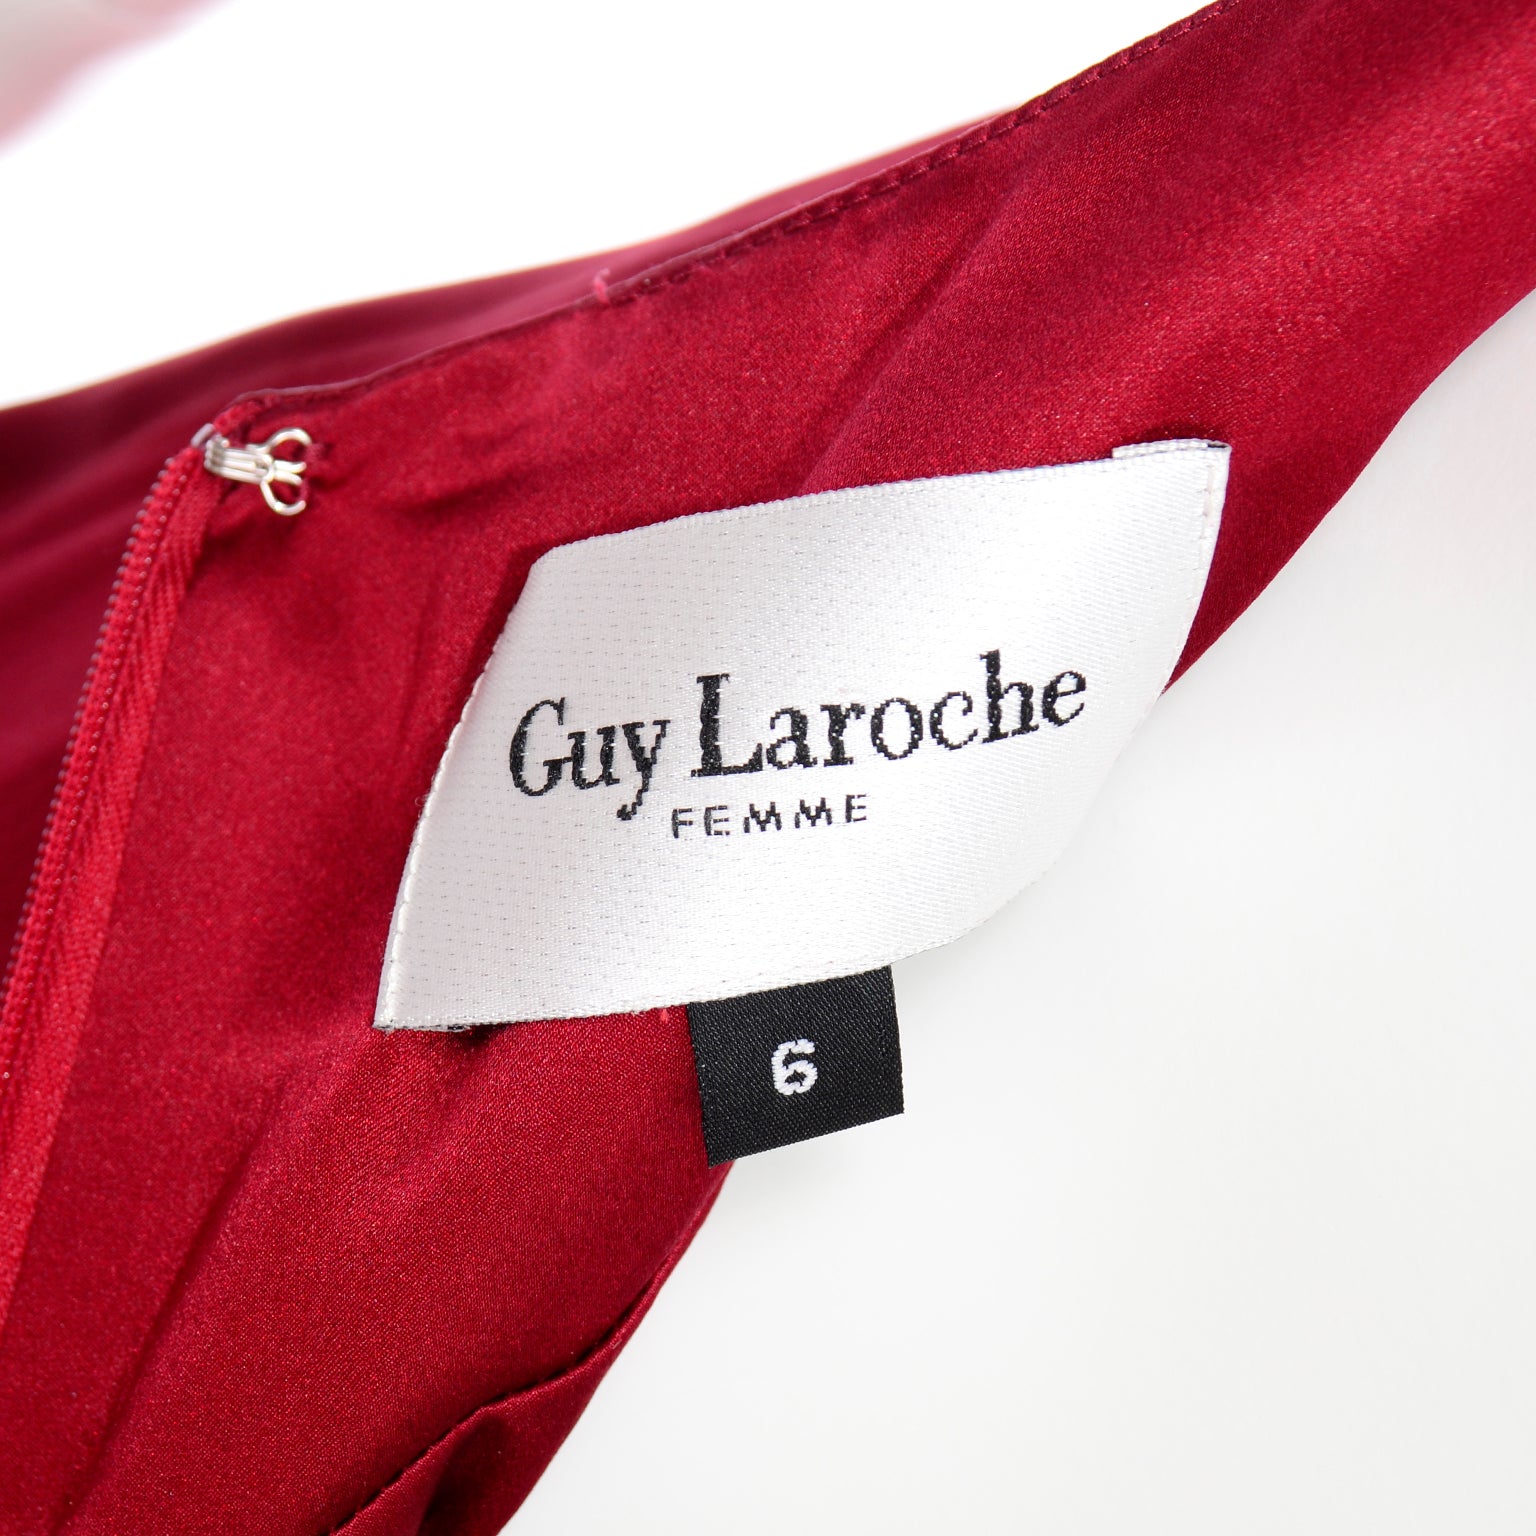 Guy Laroche Bag in perfect condition